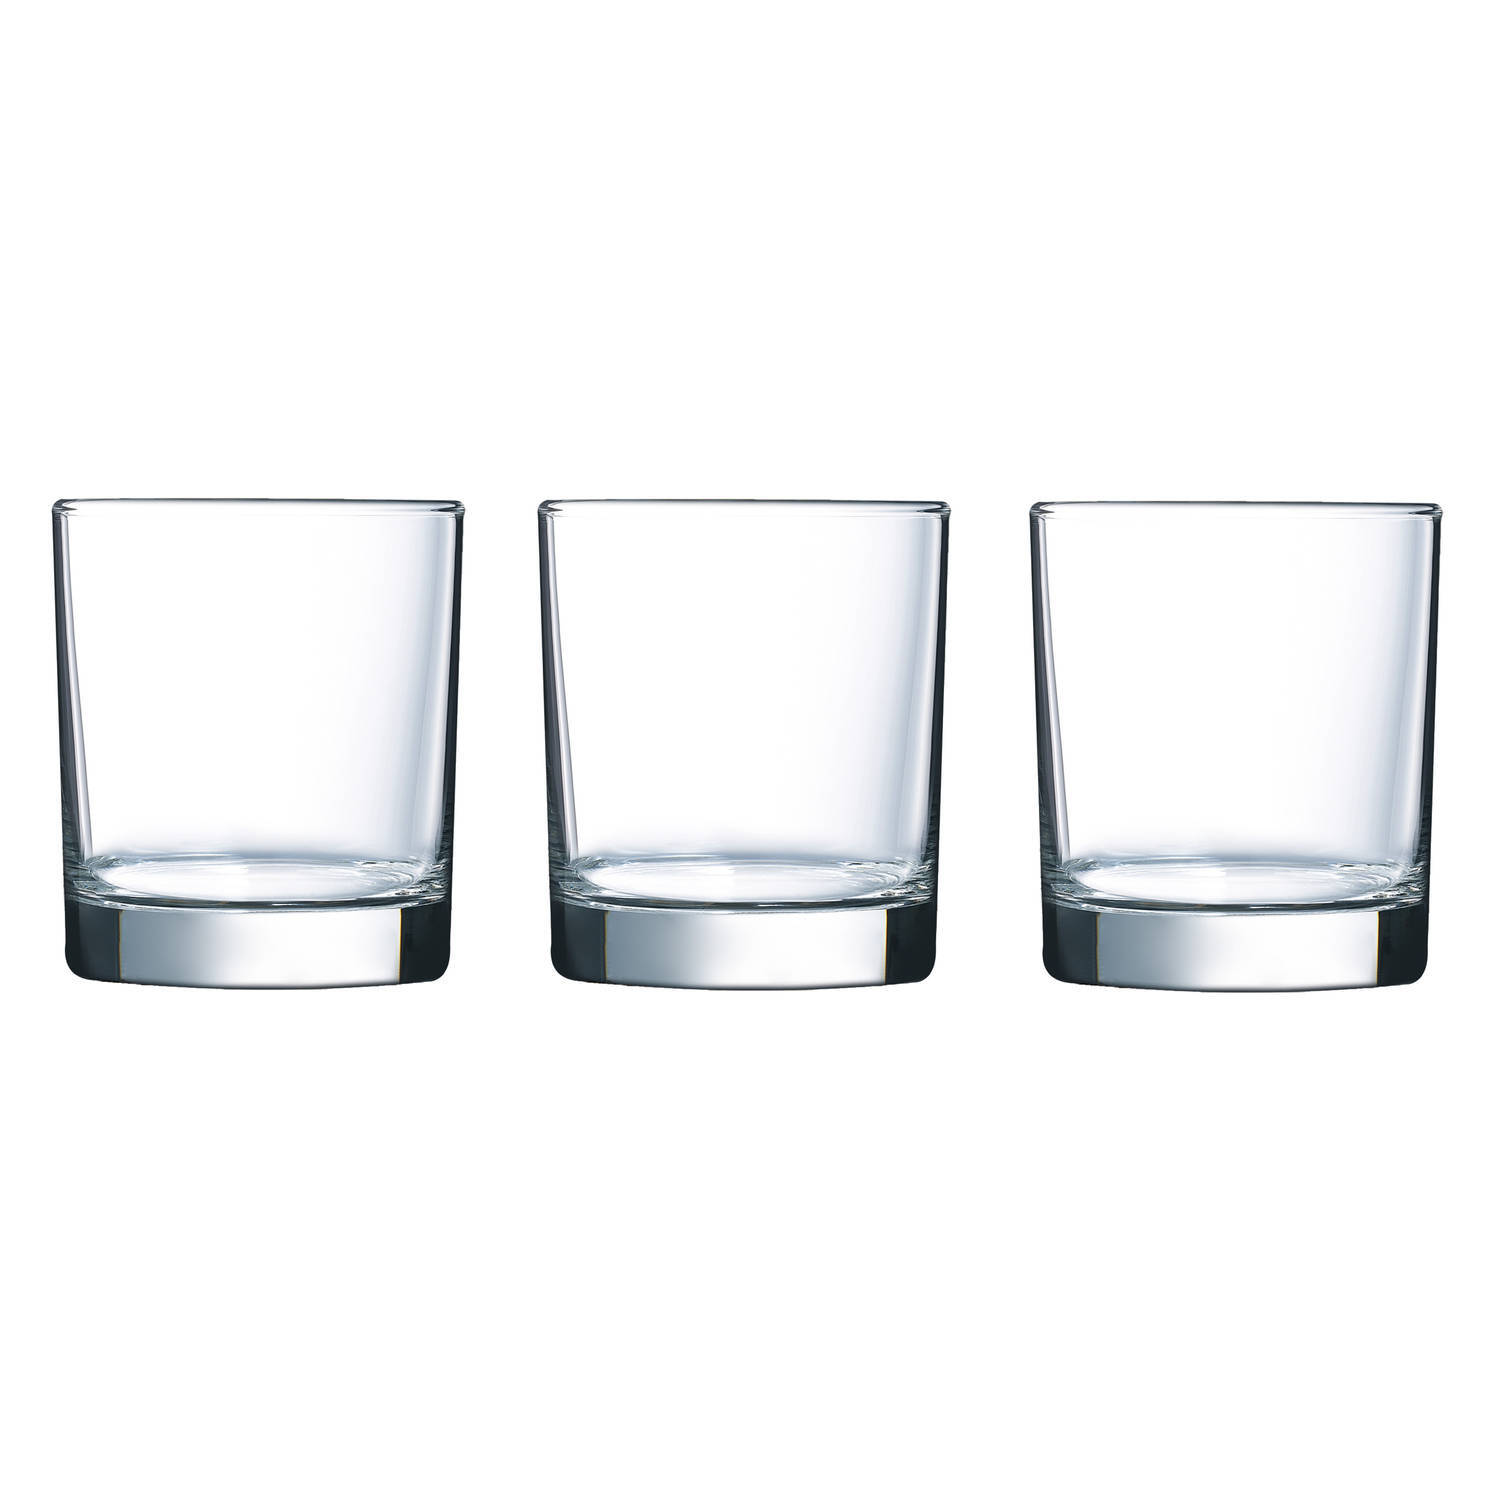 ARCOROC 12x Stuks drinkglazen/waterglazen transparant 300 ml - Glazen - Drinkglas/waterglas/tumblerglas